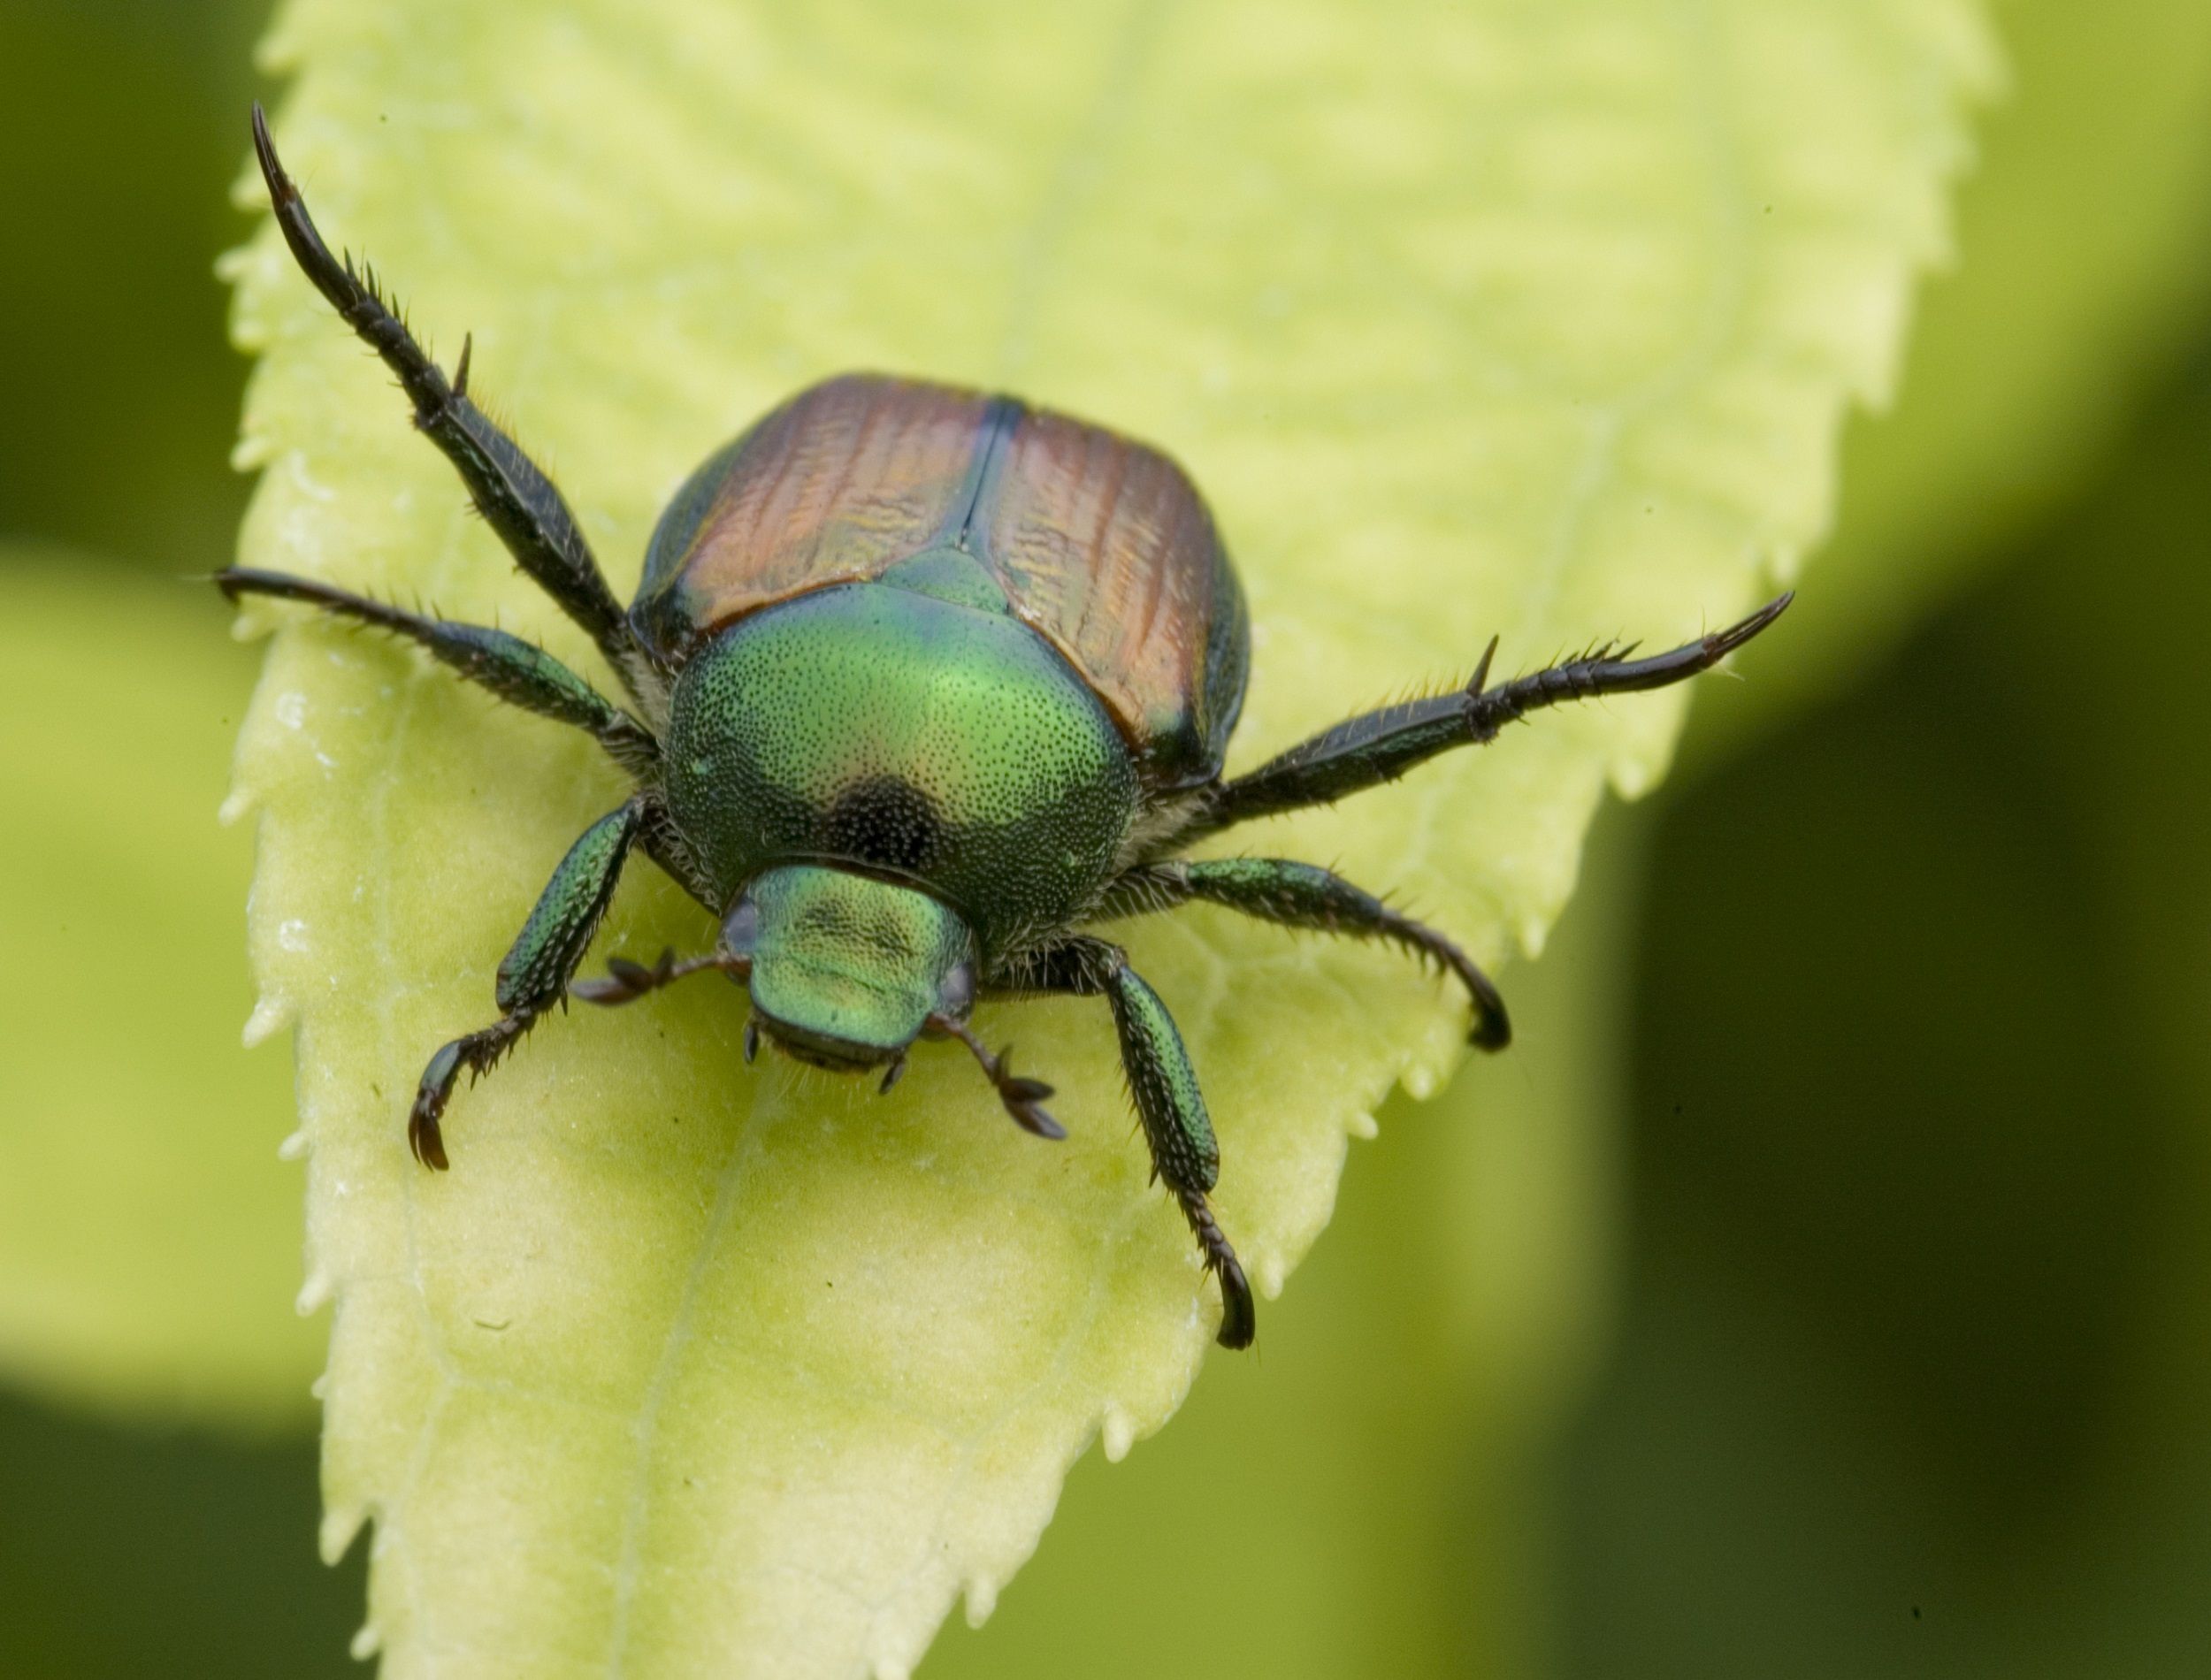 Japanese beetle on a leaf close up